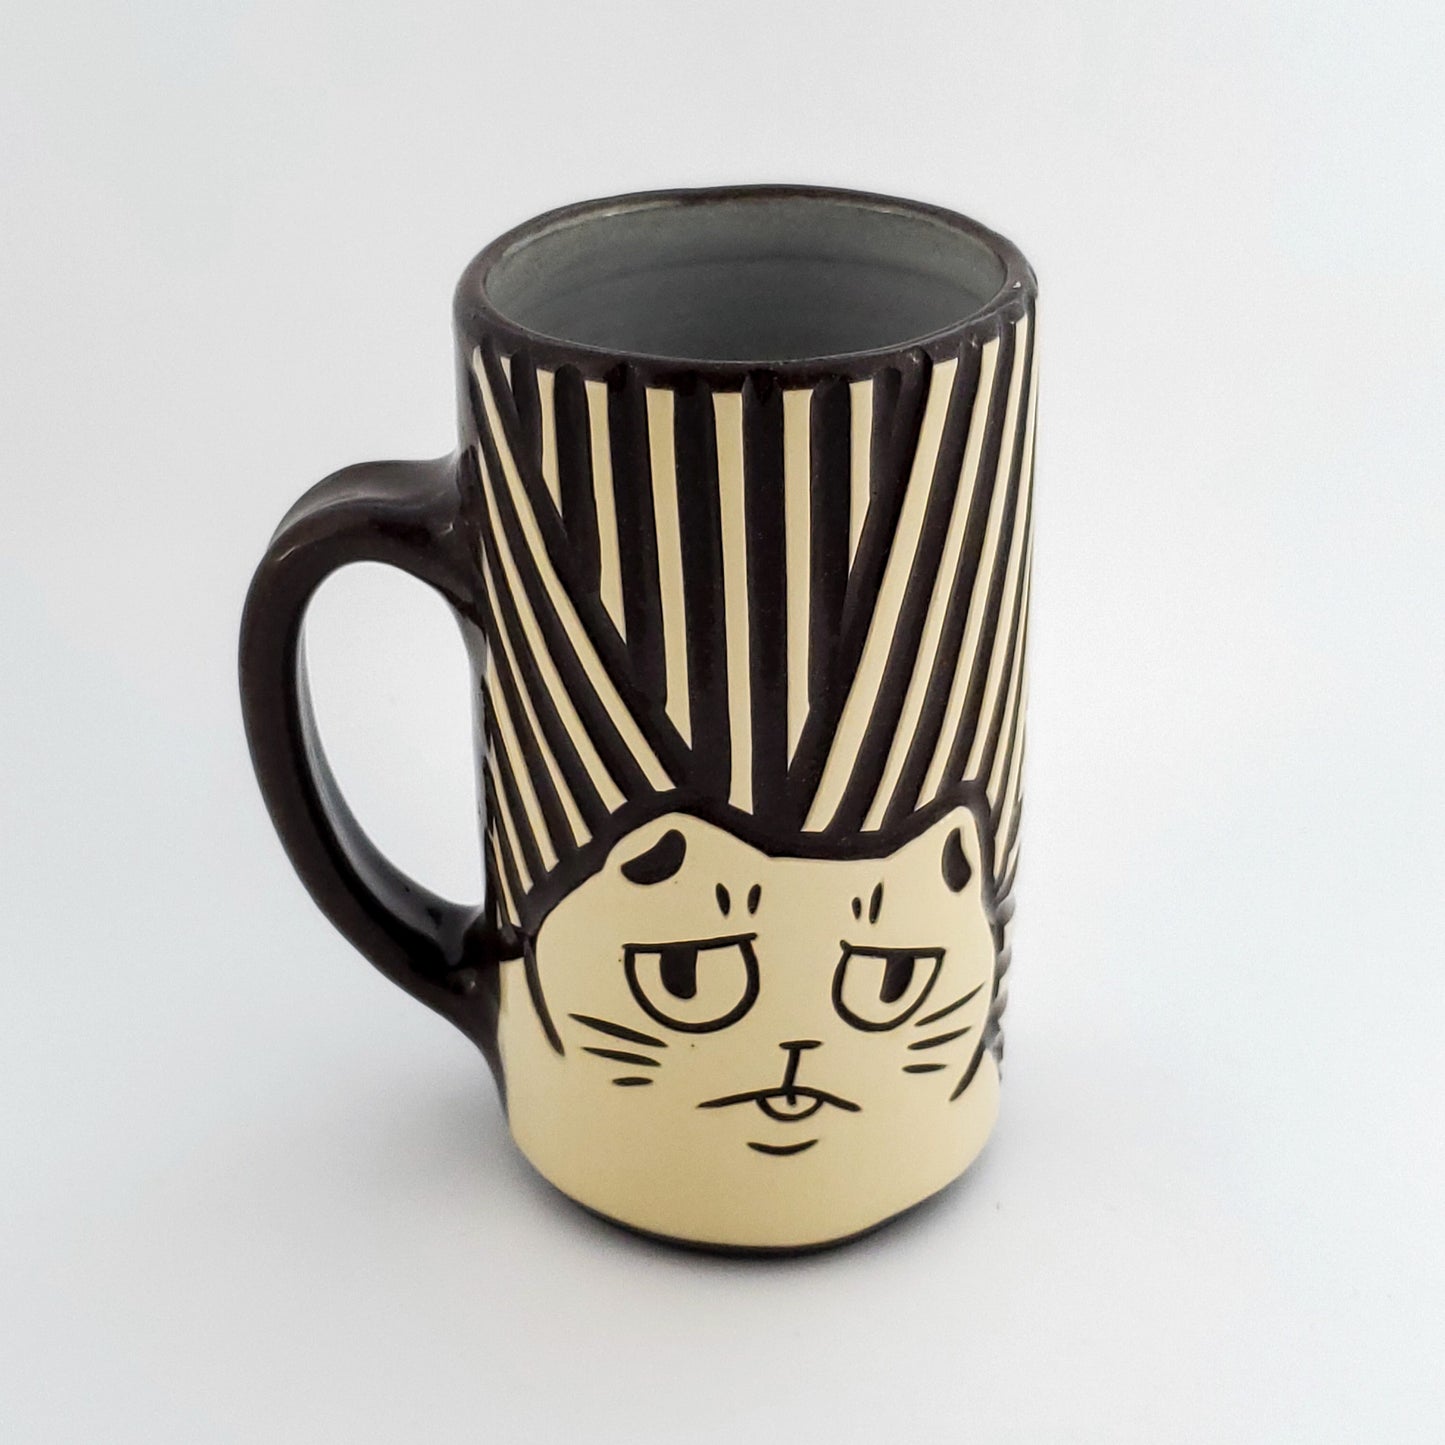 16 oz Chonky Grumpy Cat Mug in Coffee*